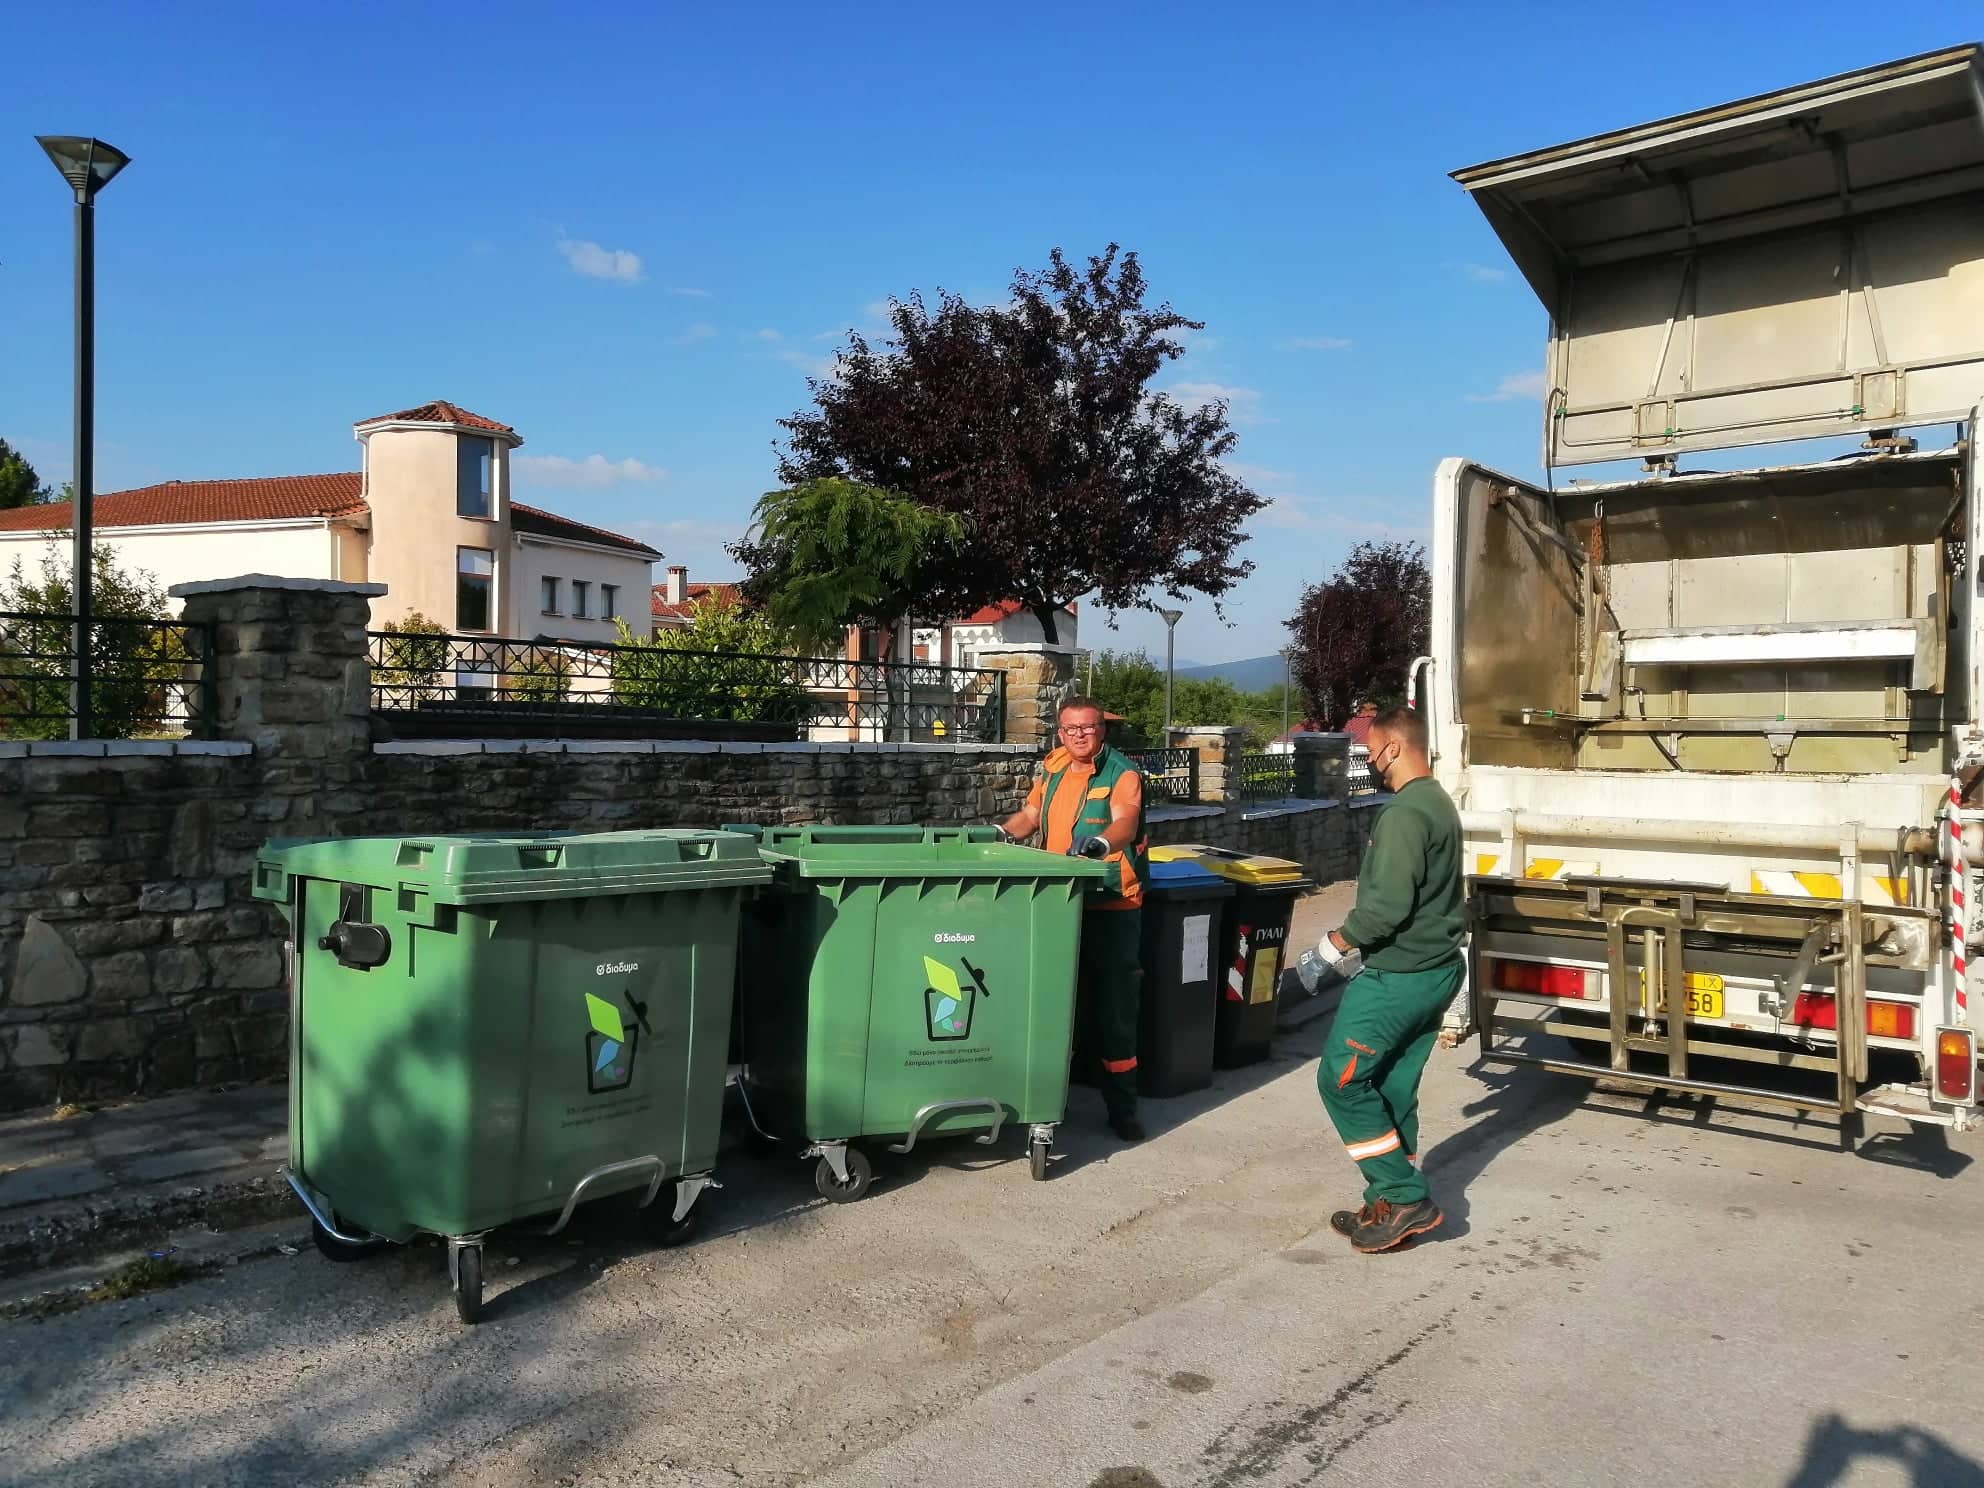 Aνακοίνωση- Πλύσιμο των κάδων απορριμμάτων στο Δήμο Δεσκάτης